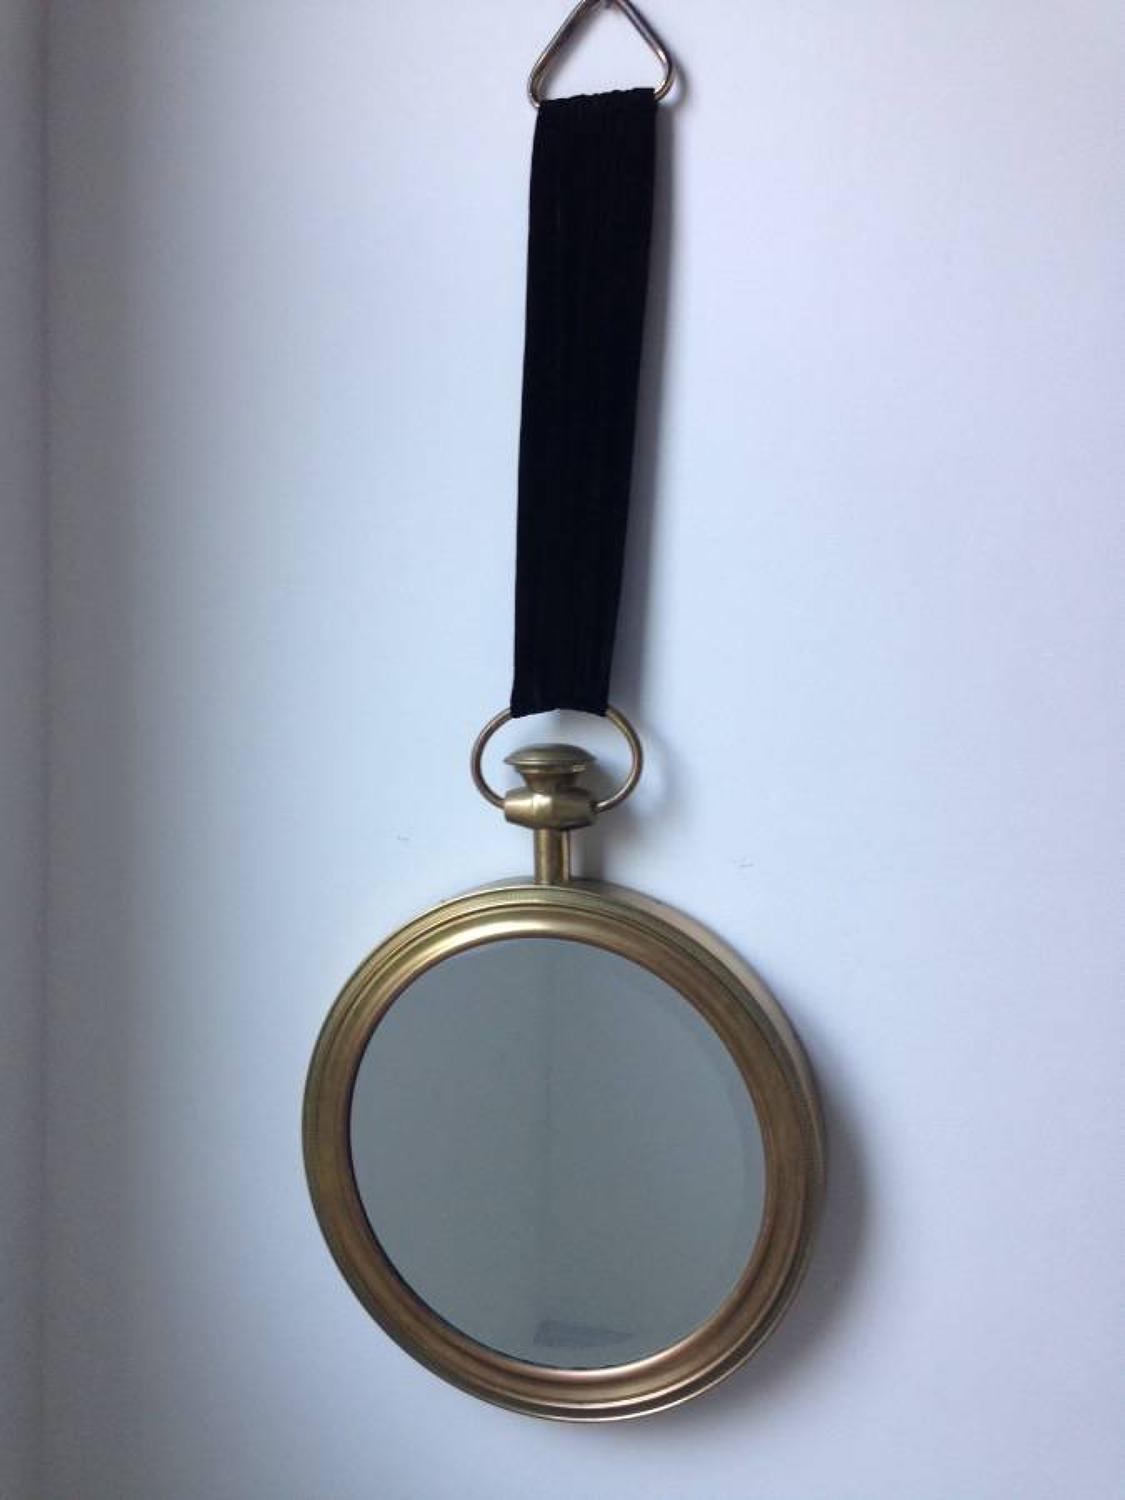 Brass pocket watch mirror by Fornasetti